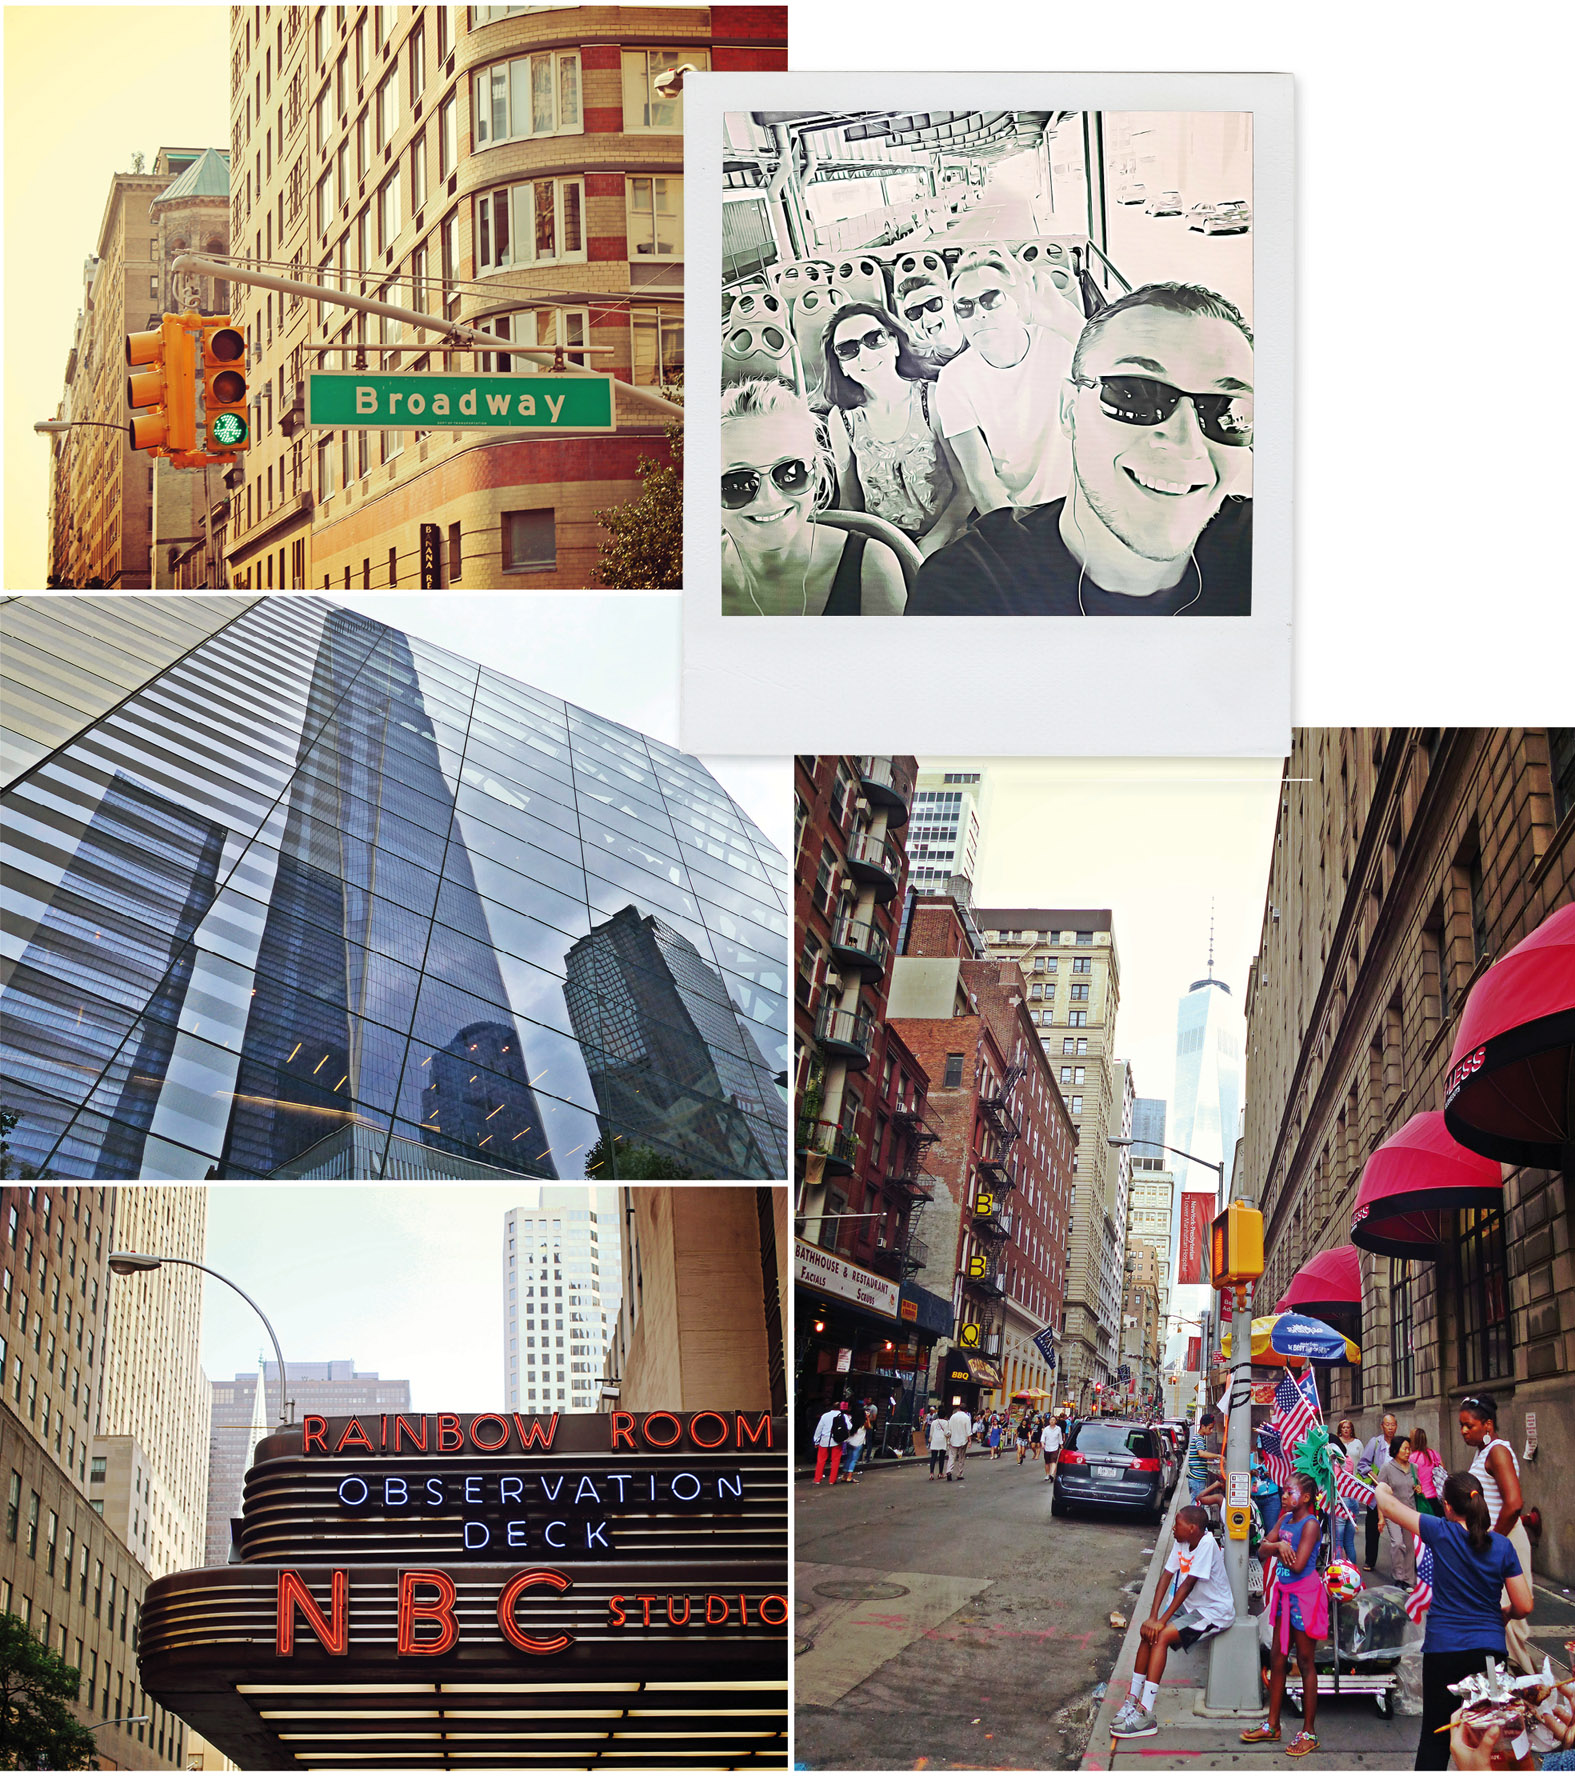 usa, New York, nyc, voyage, road trip, buildings